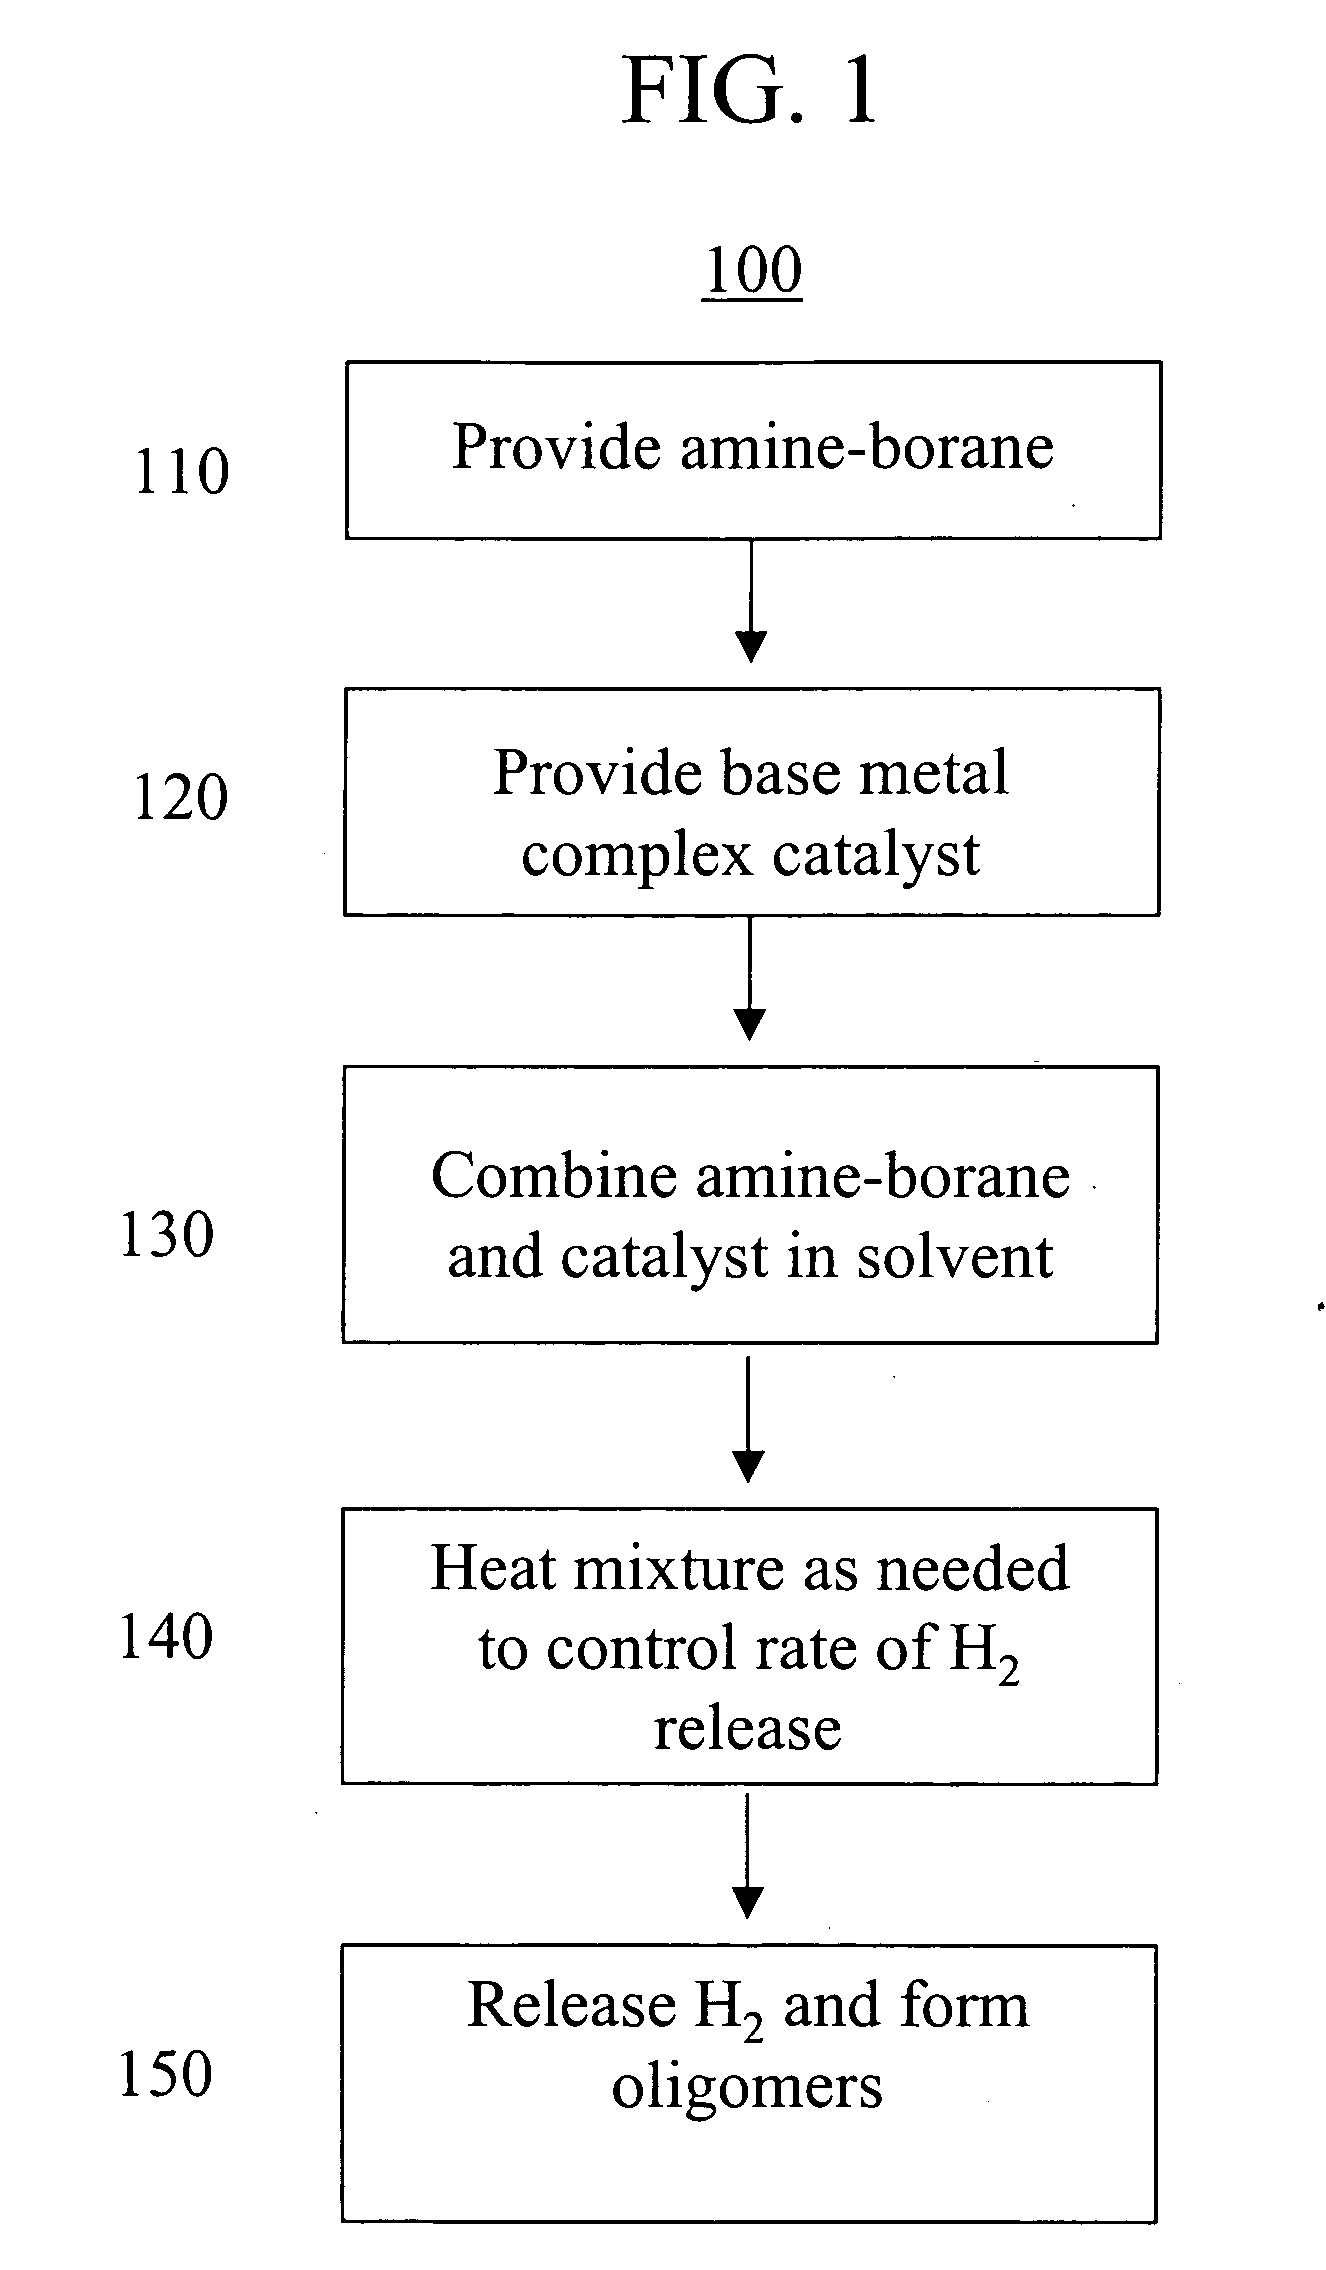 Base metal dehydrogenation of amine-boranes